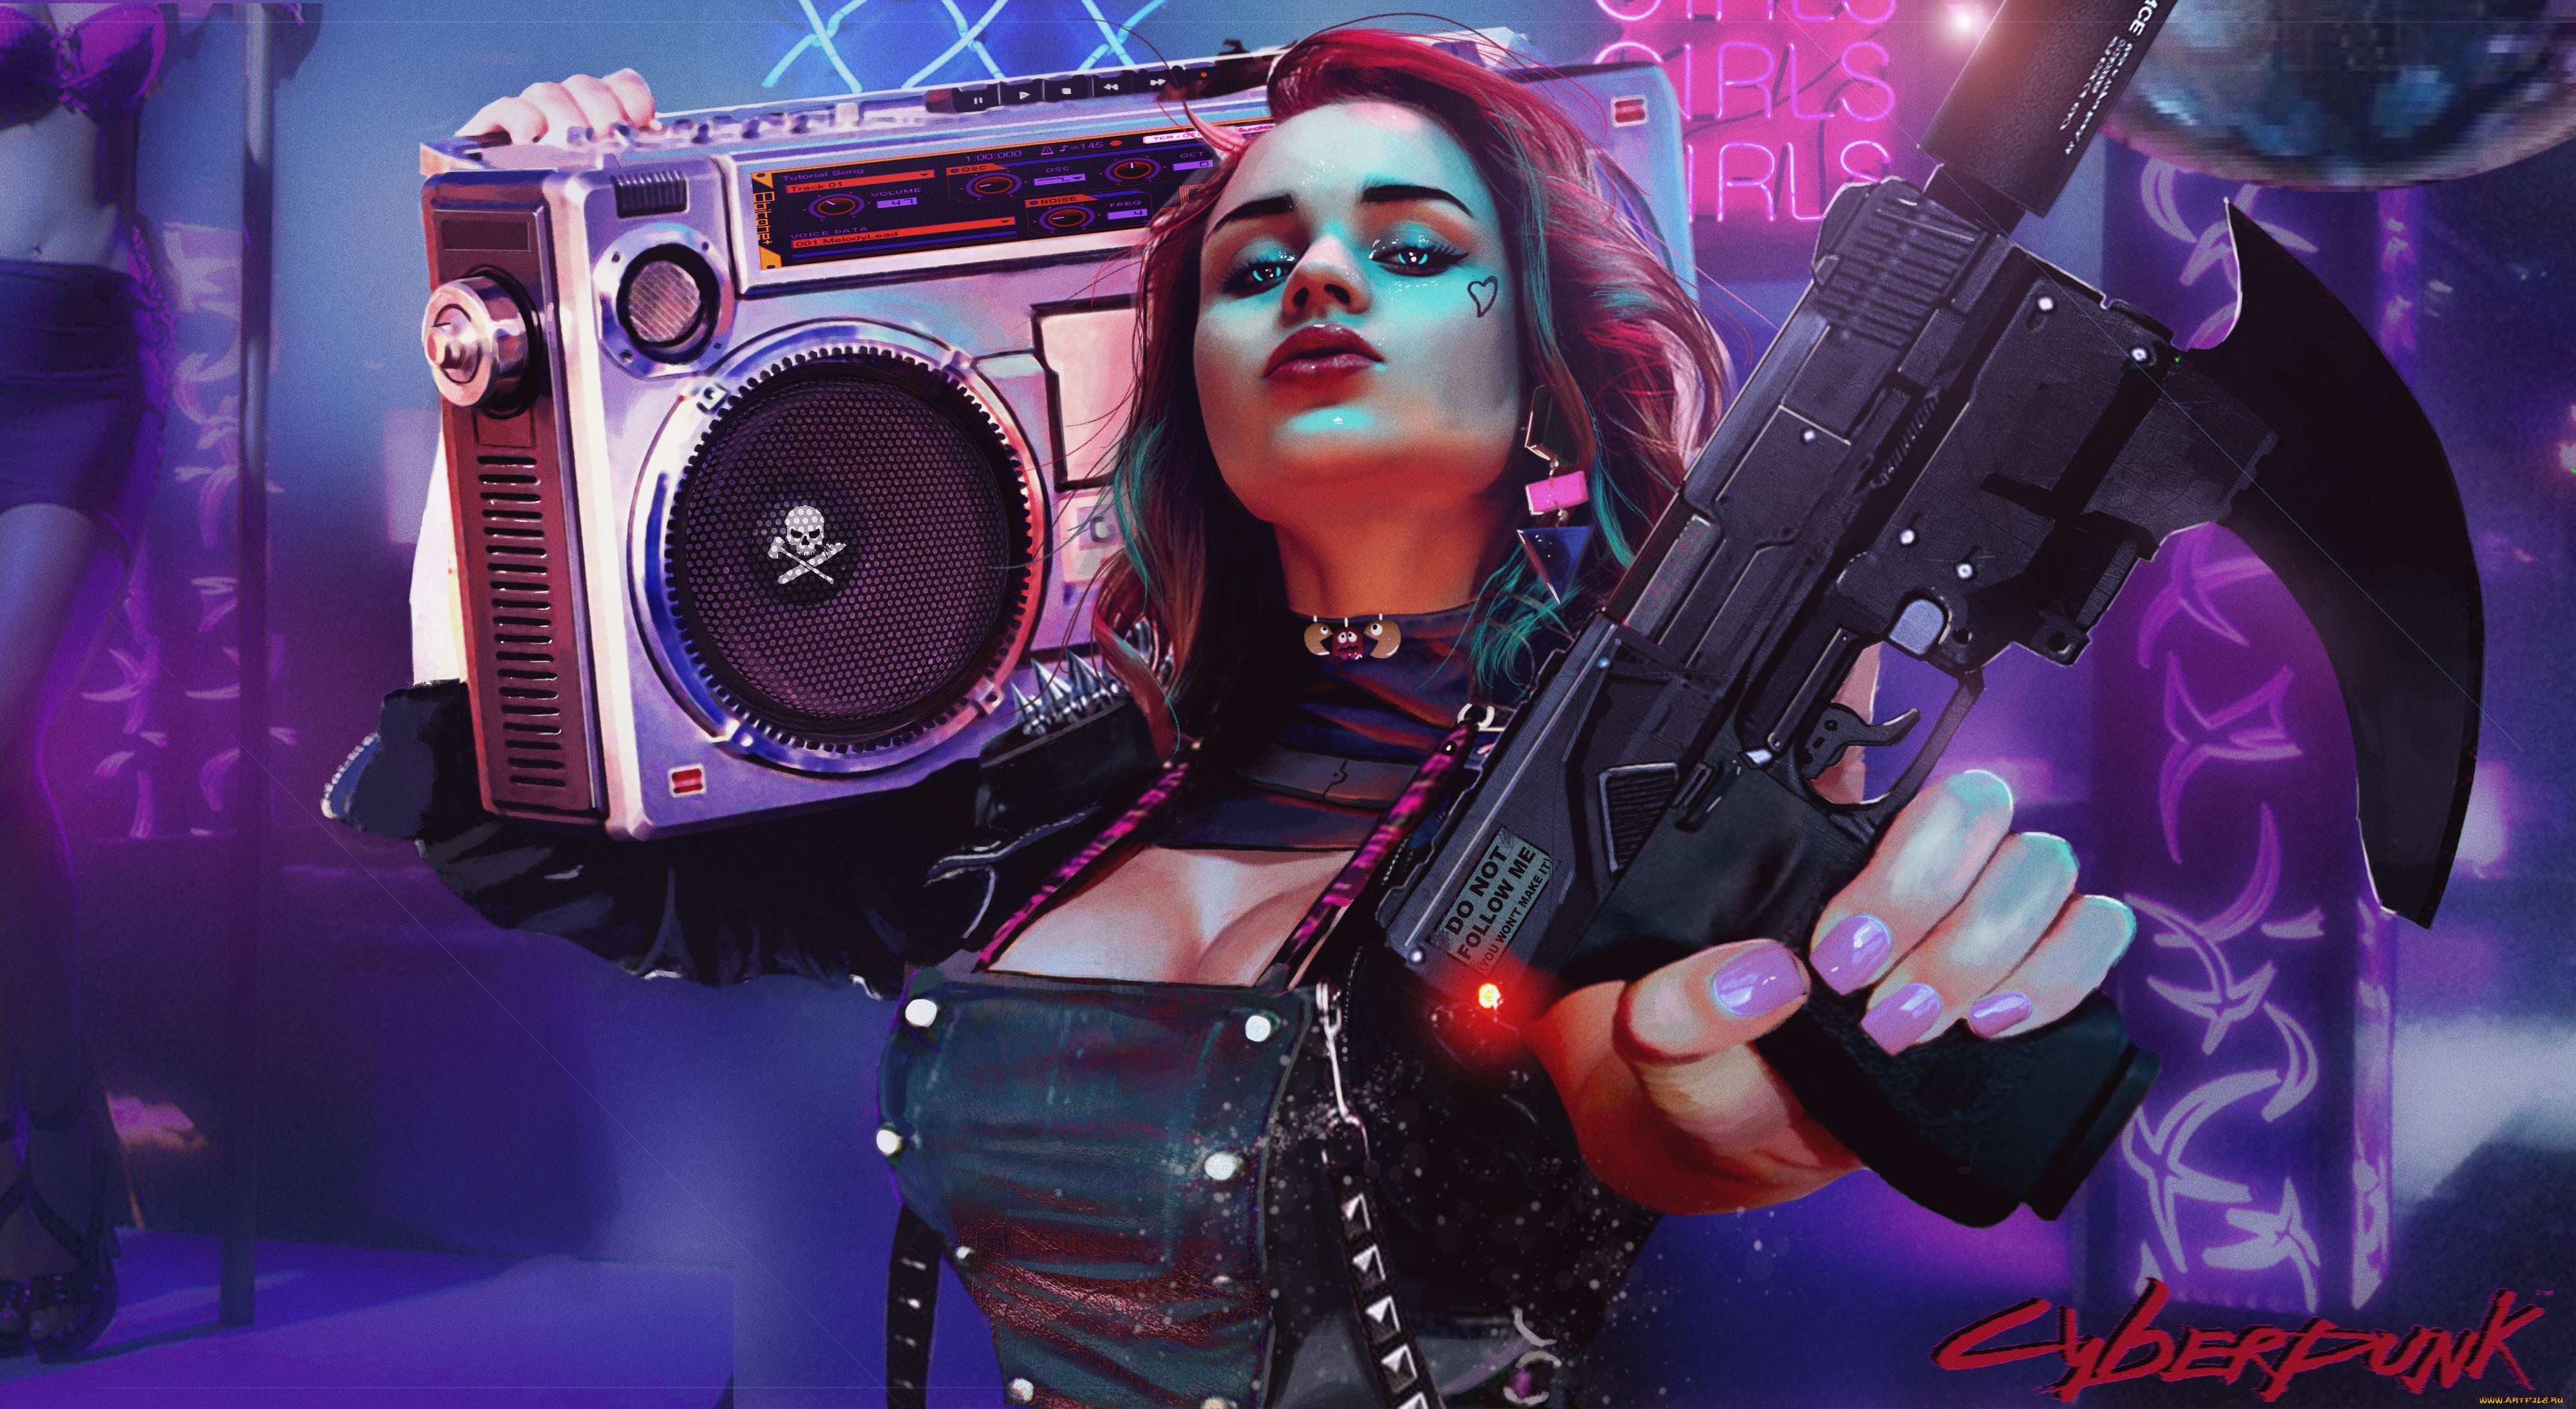 Cyberpunk girl 4K Wallpaper, 2020 Games, Cyberpunk 2077, Neon, Artwork